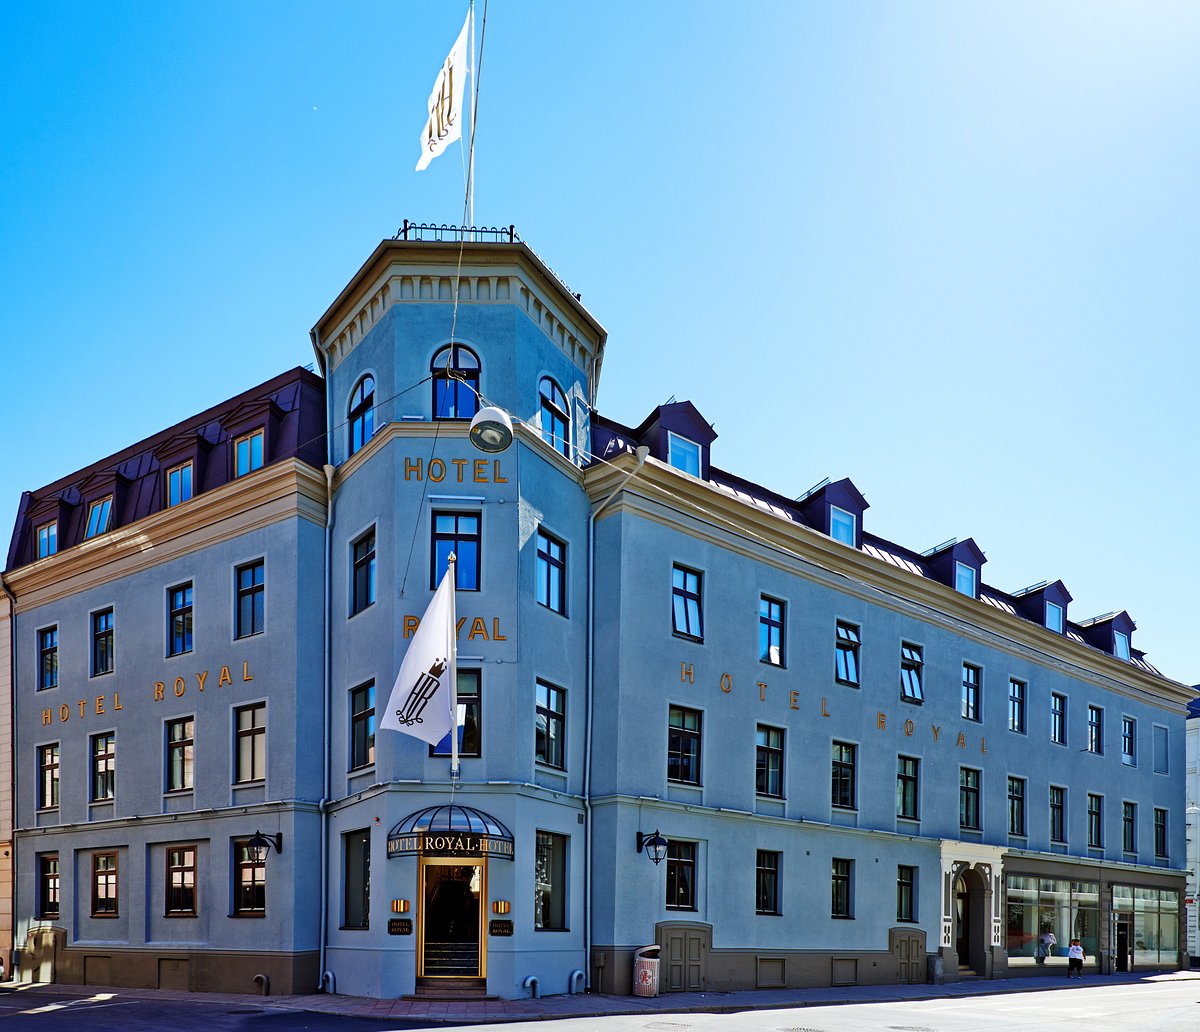 Hotel Royal, ett hotell i Göteborg